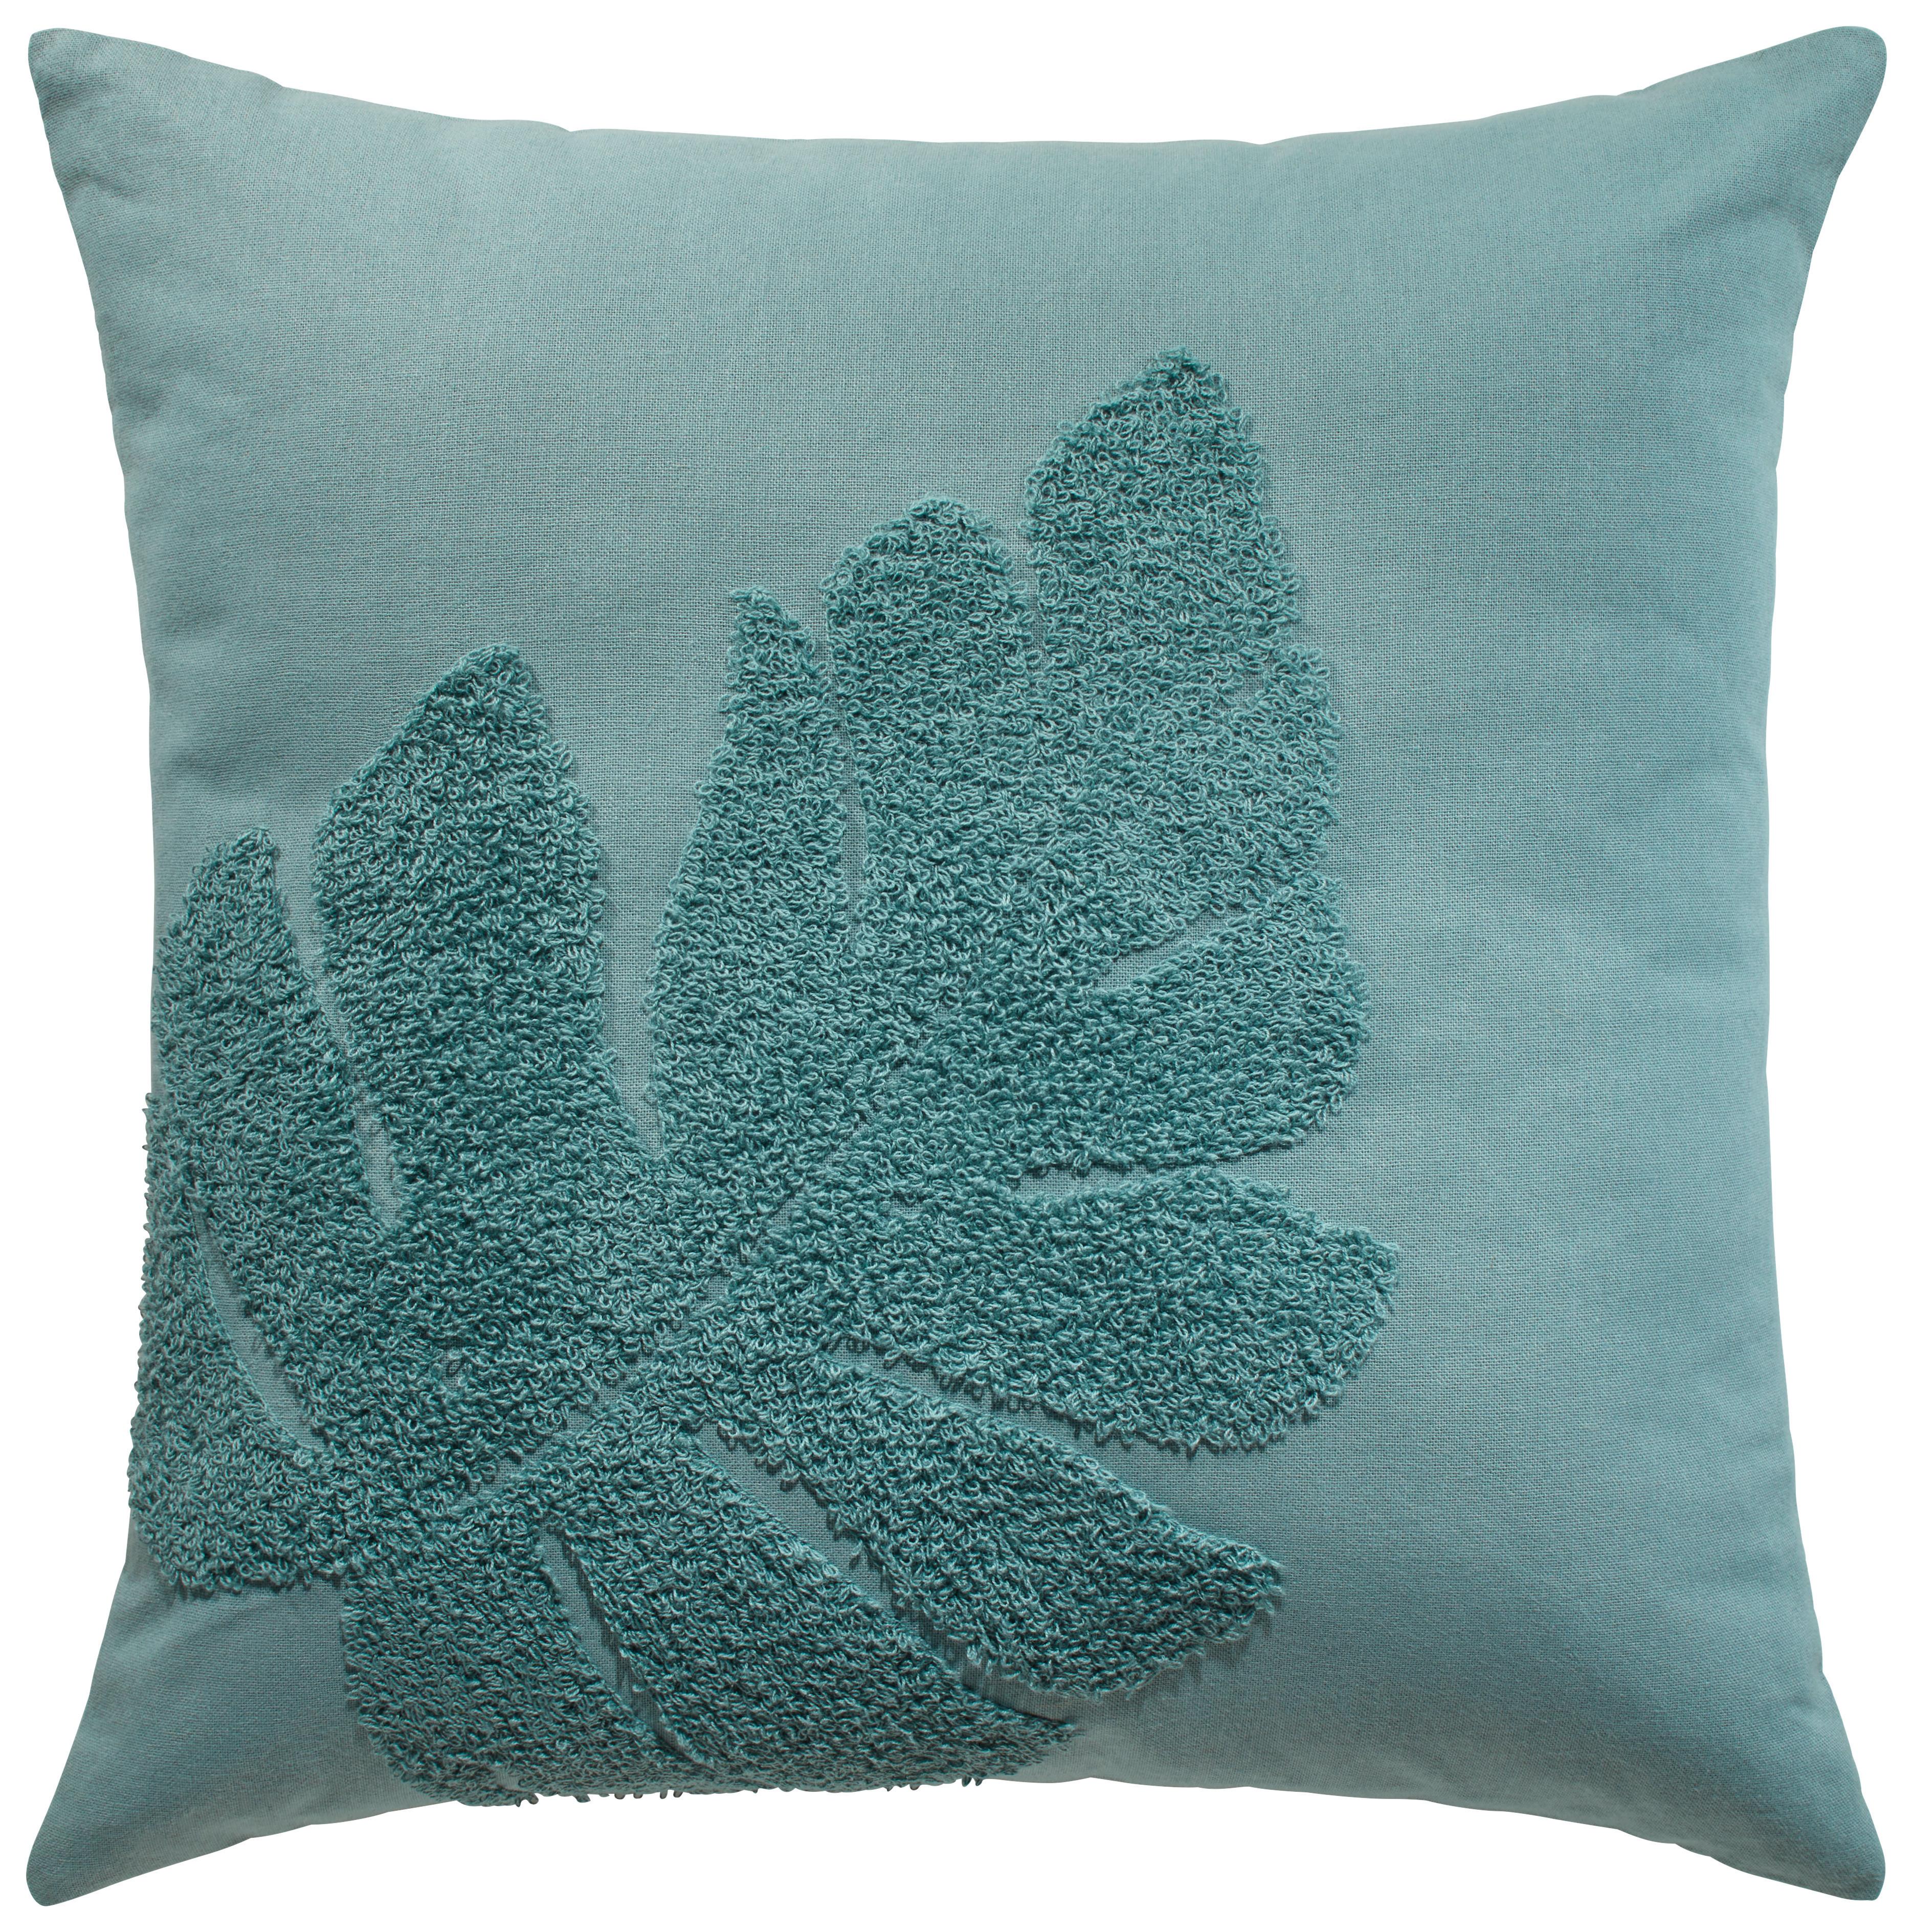 Zierkissen Leave in Blau ca. 45x45cm - Blau, MODERN, Textil (45l) - Premium Living